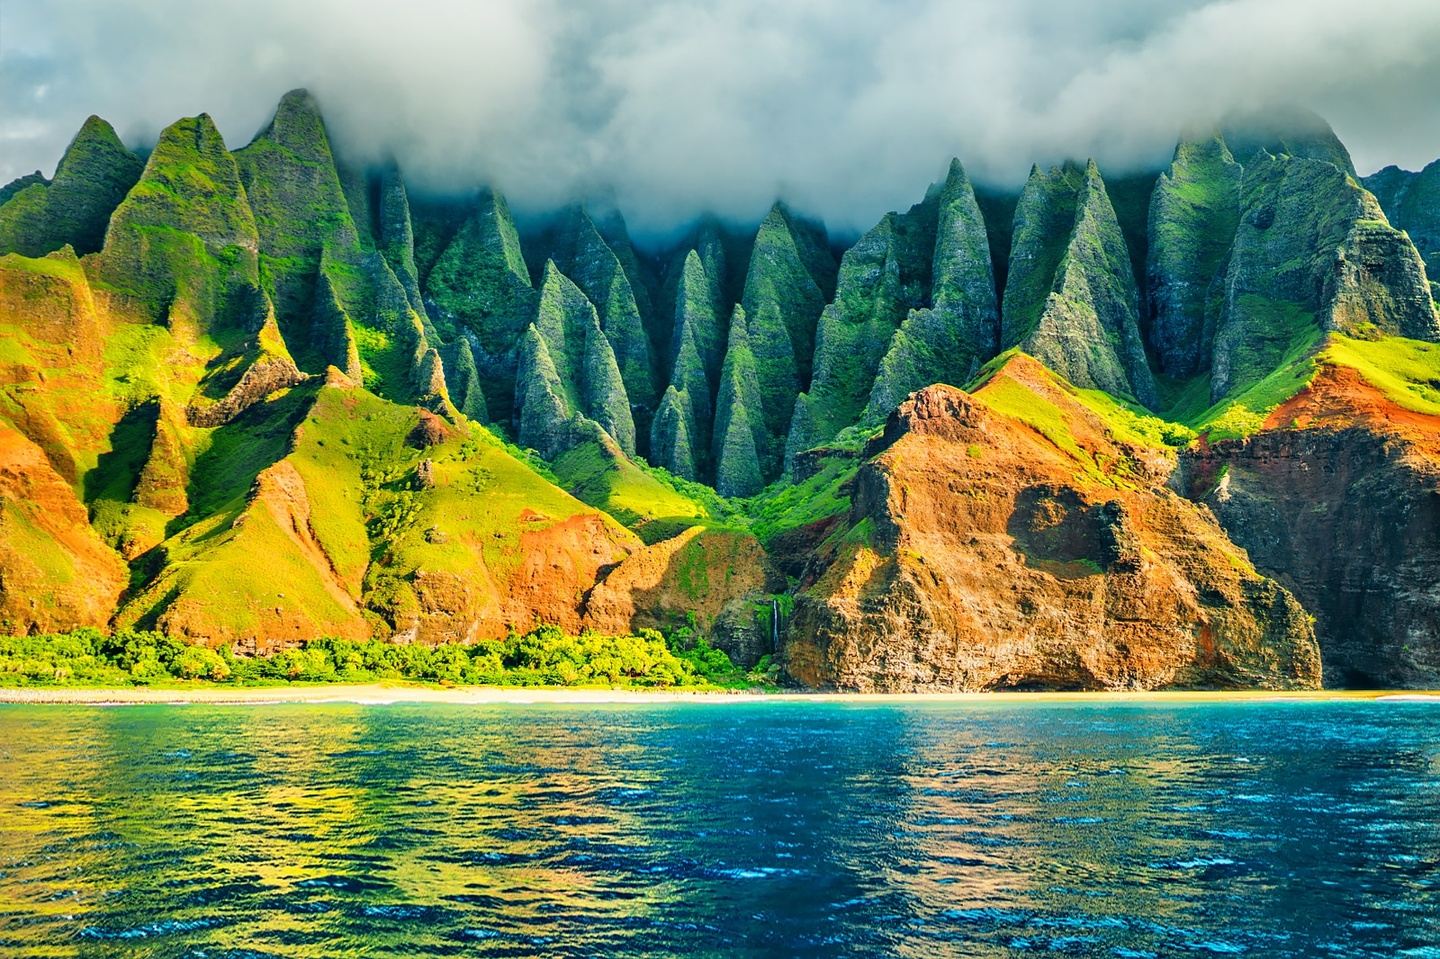 Hawaii Holiday Yoga and Meditation Retreat and Adventure